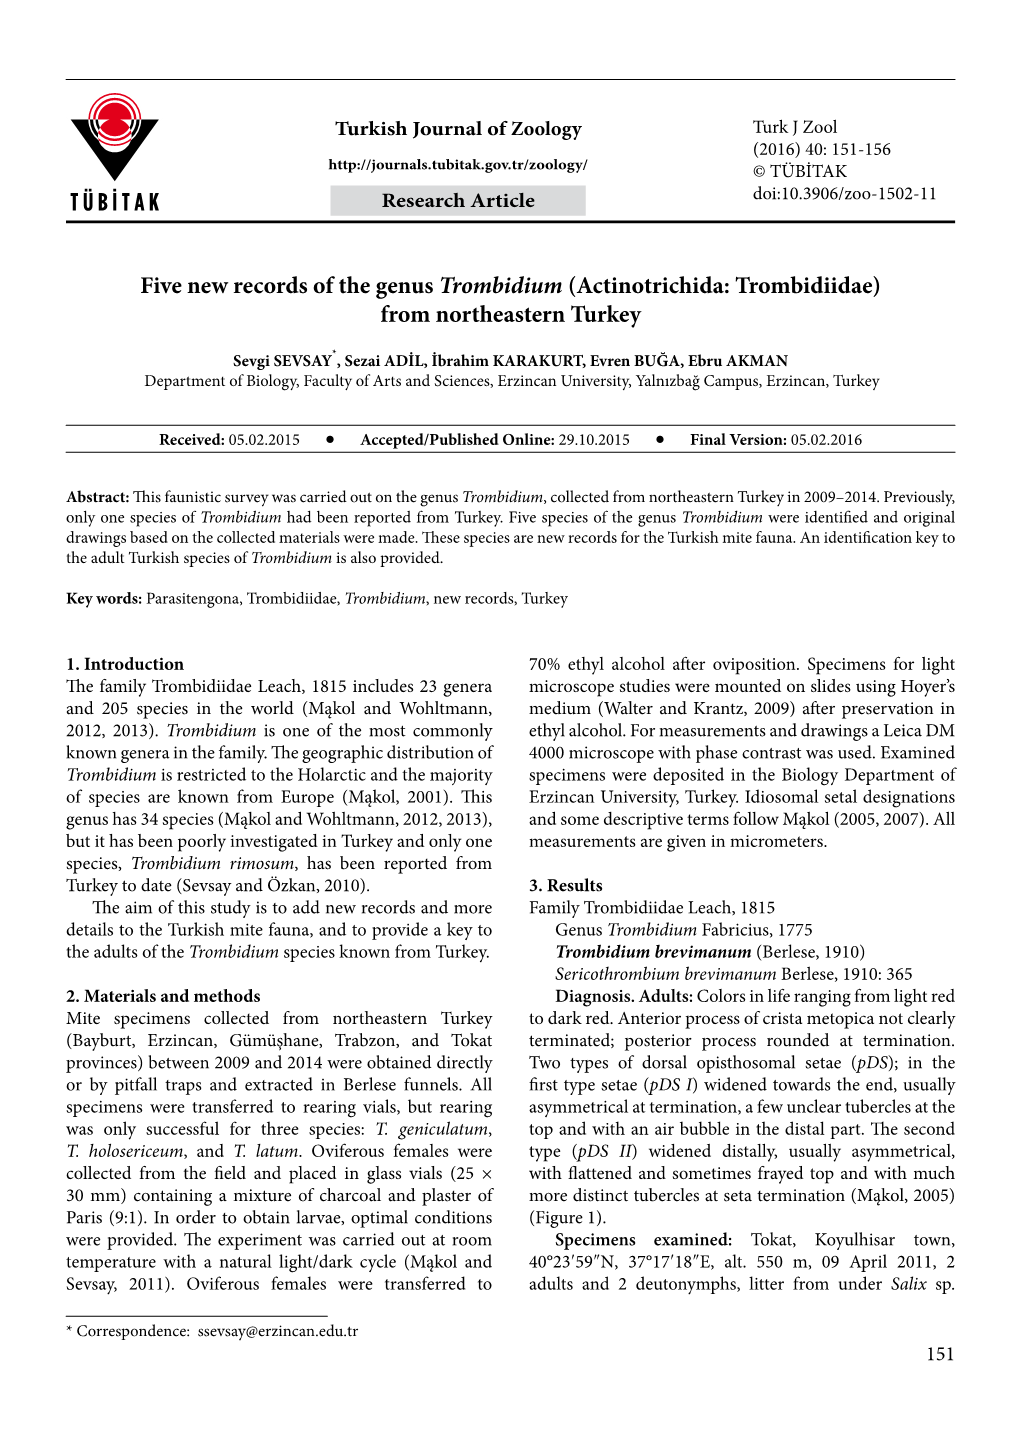 Five New Records of the Genus Trombidium (Actinotrichida: Trombidiidae) from Northeastern Turkey